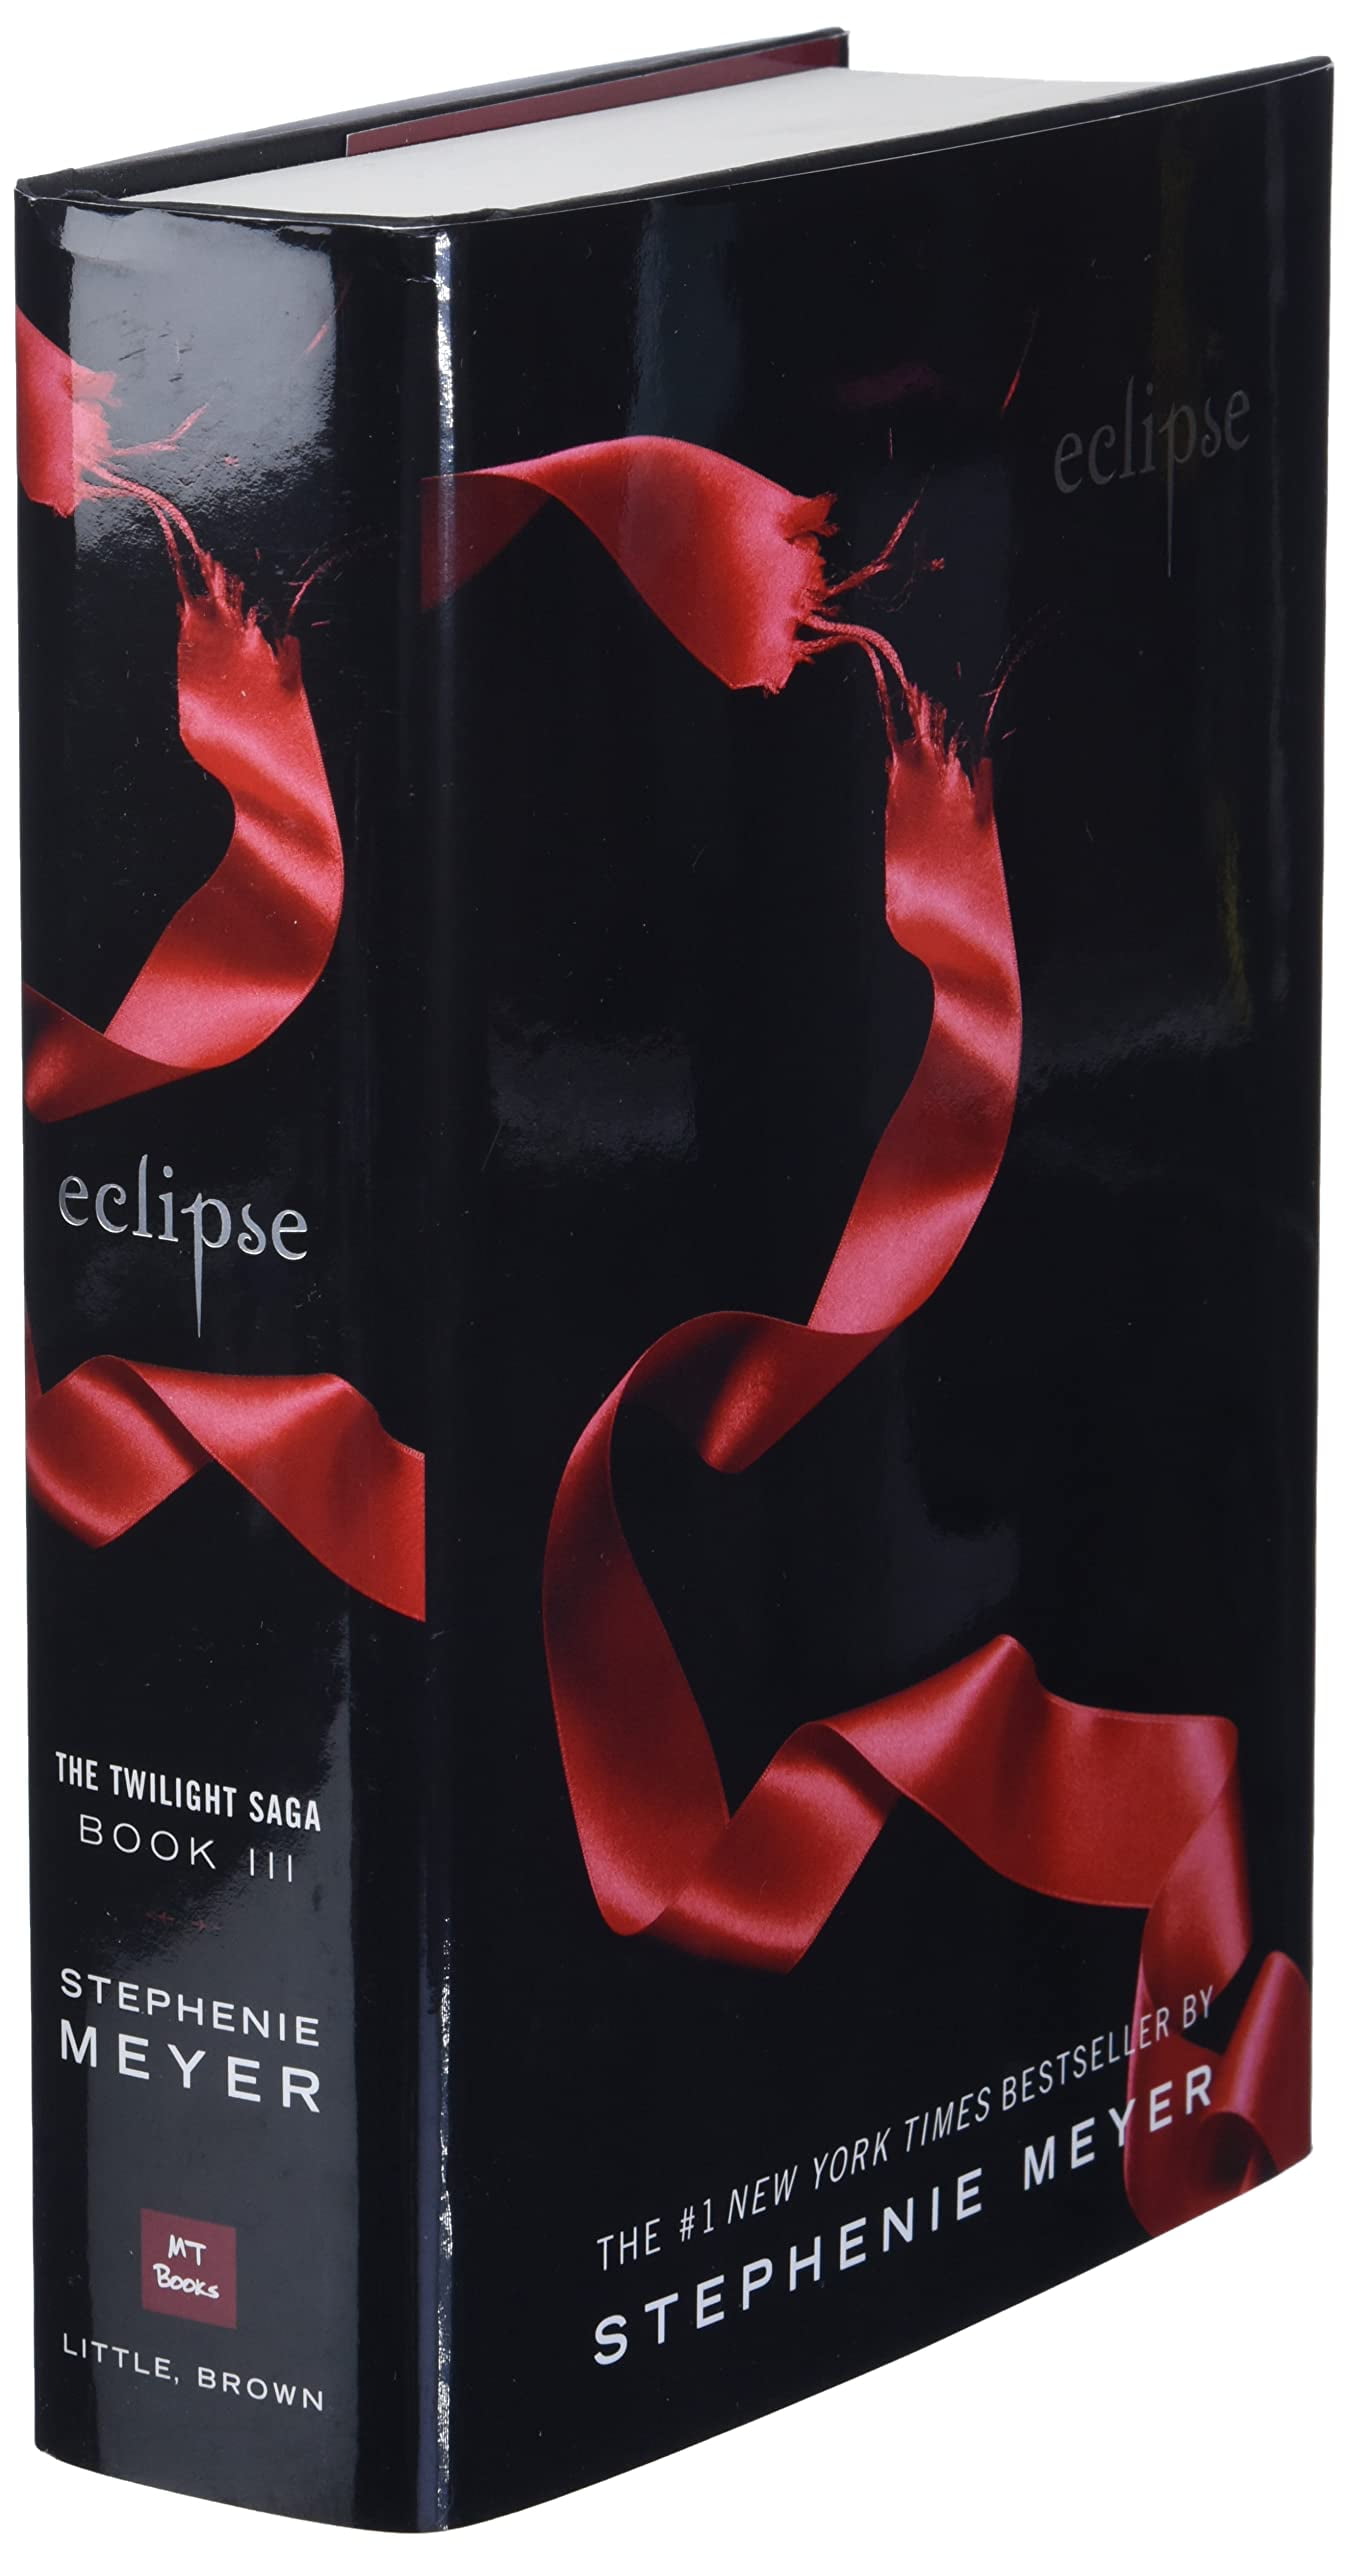 The Twilight Saga : Eclipse - The International Bestseller.